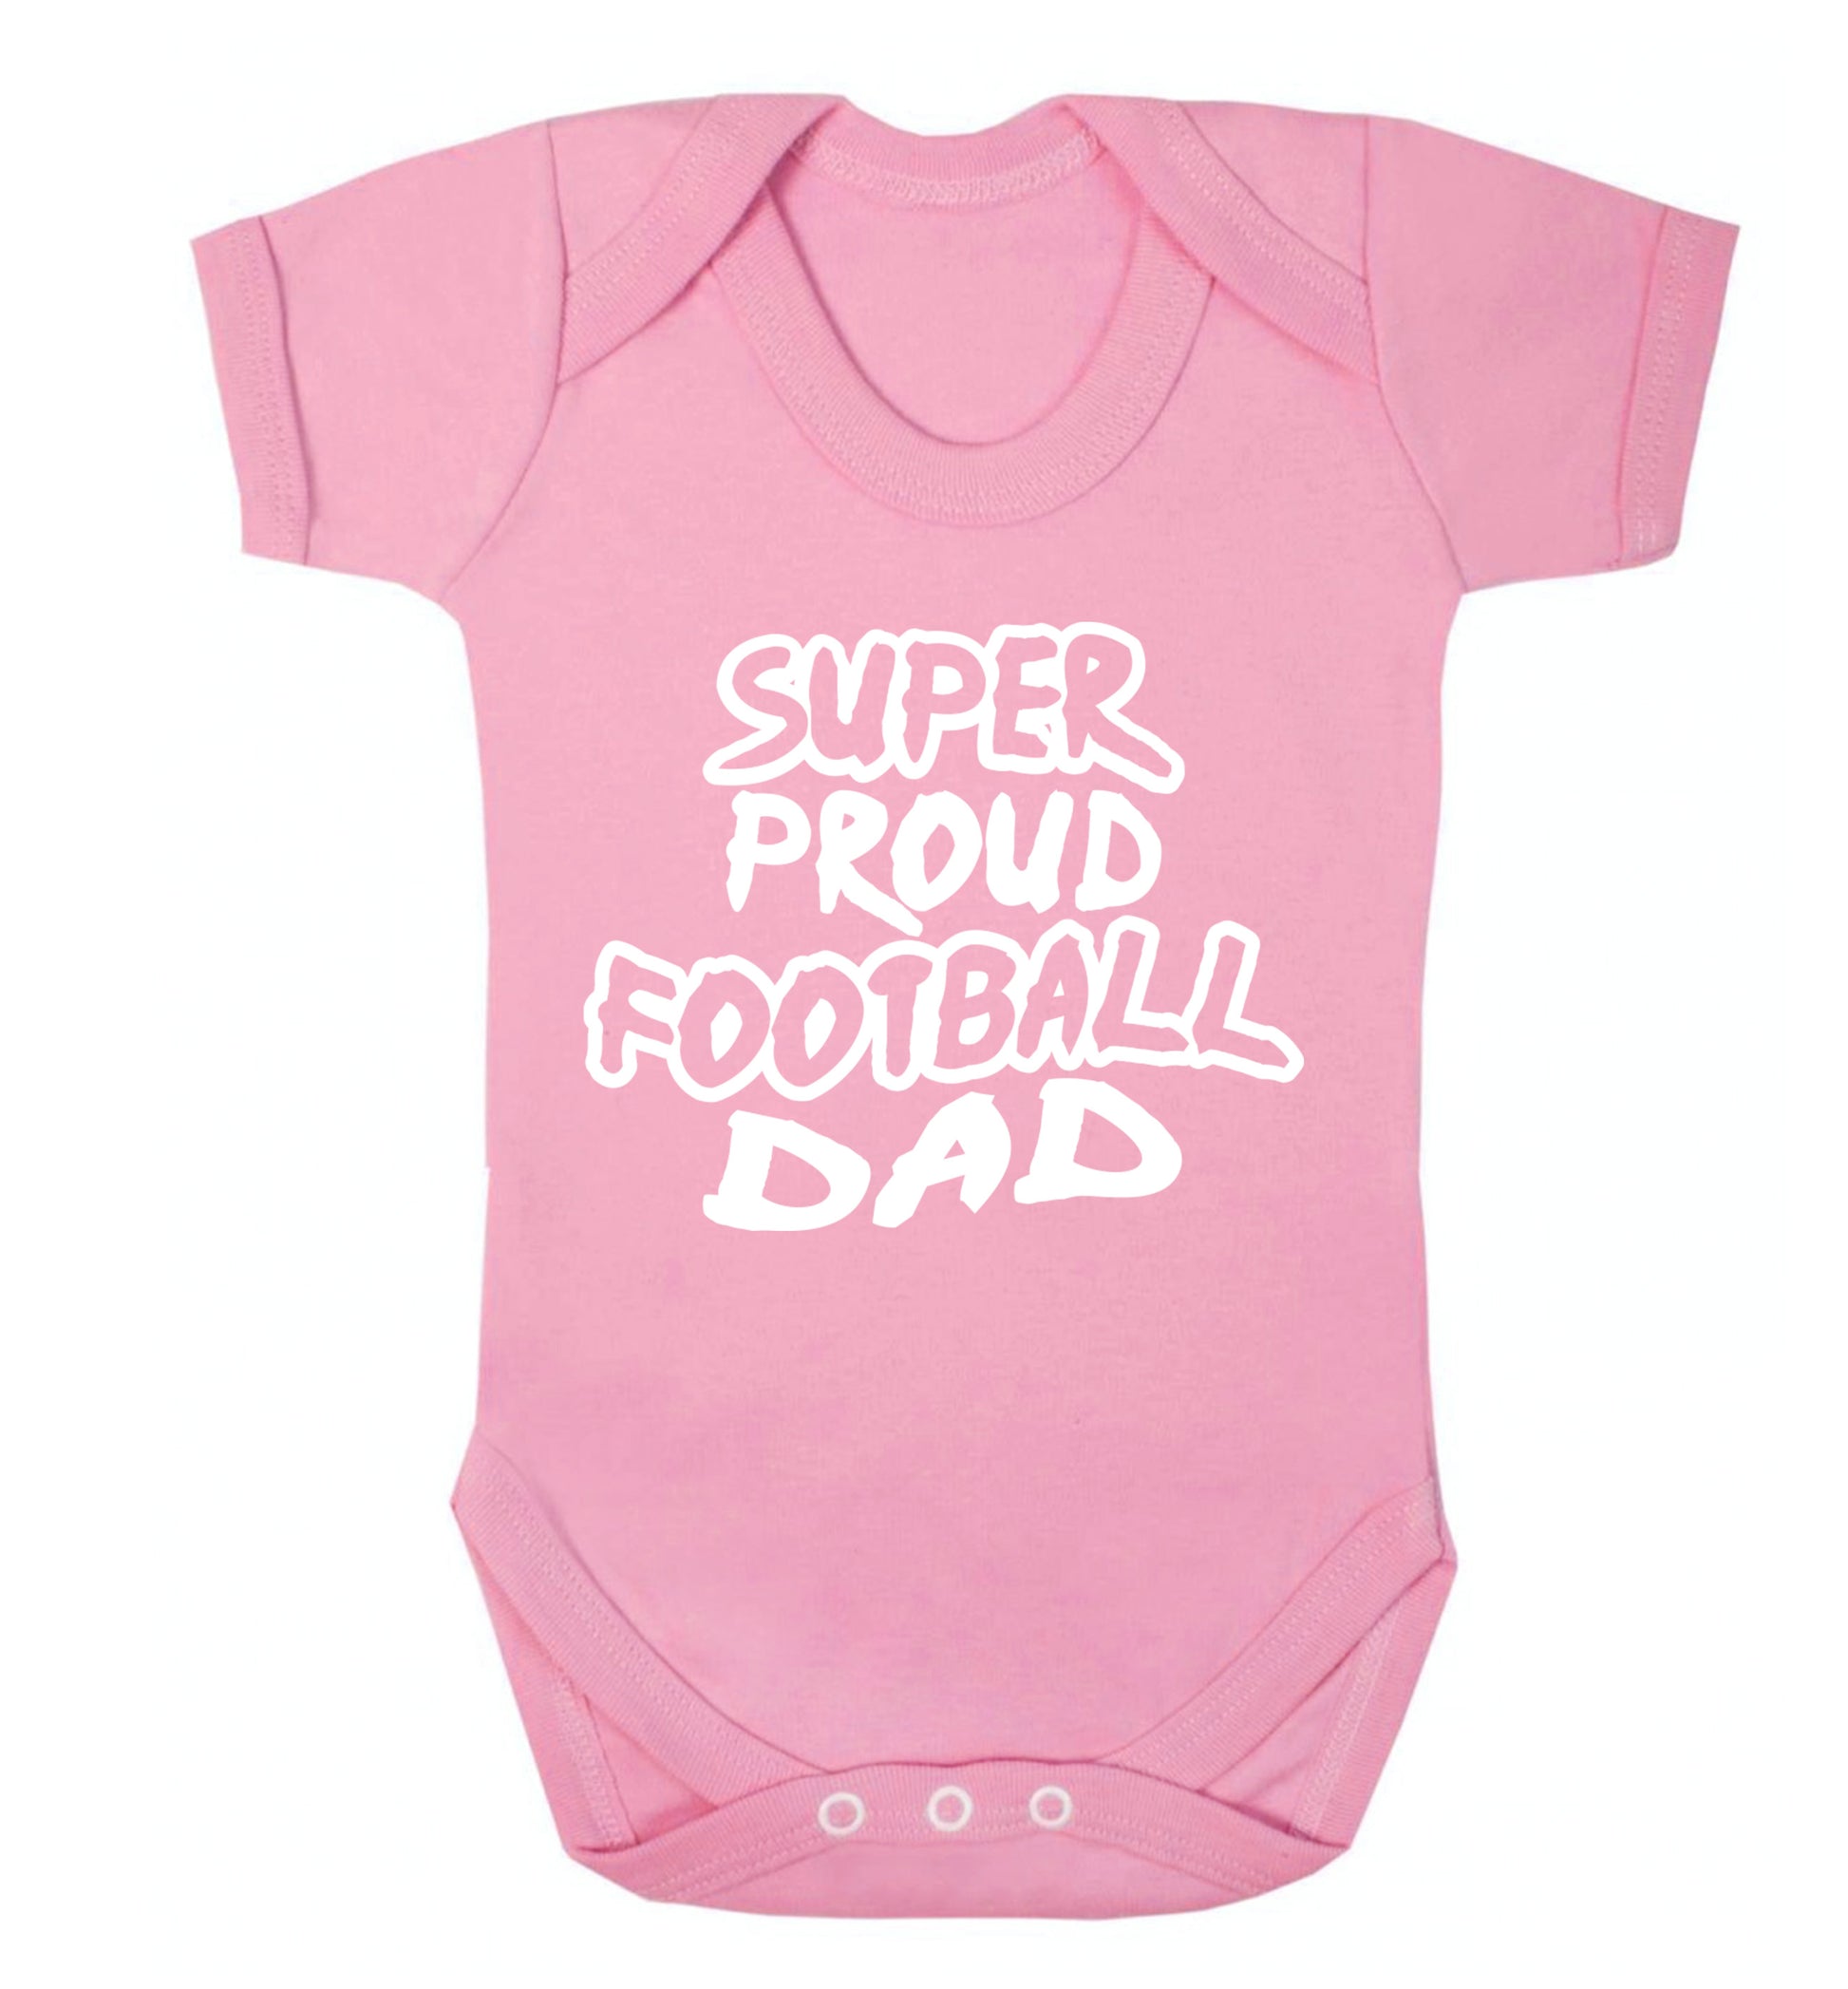 Super proud football dad Baby Vest pale pink 18-24 months